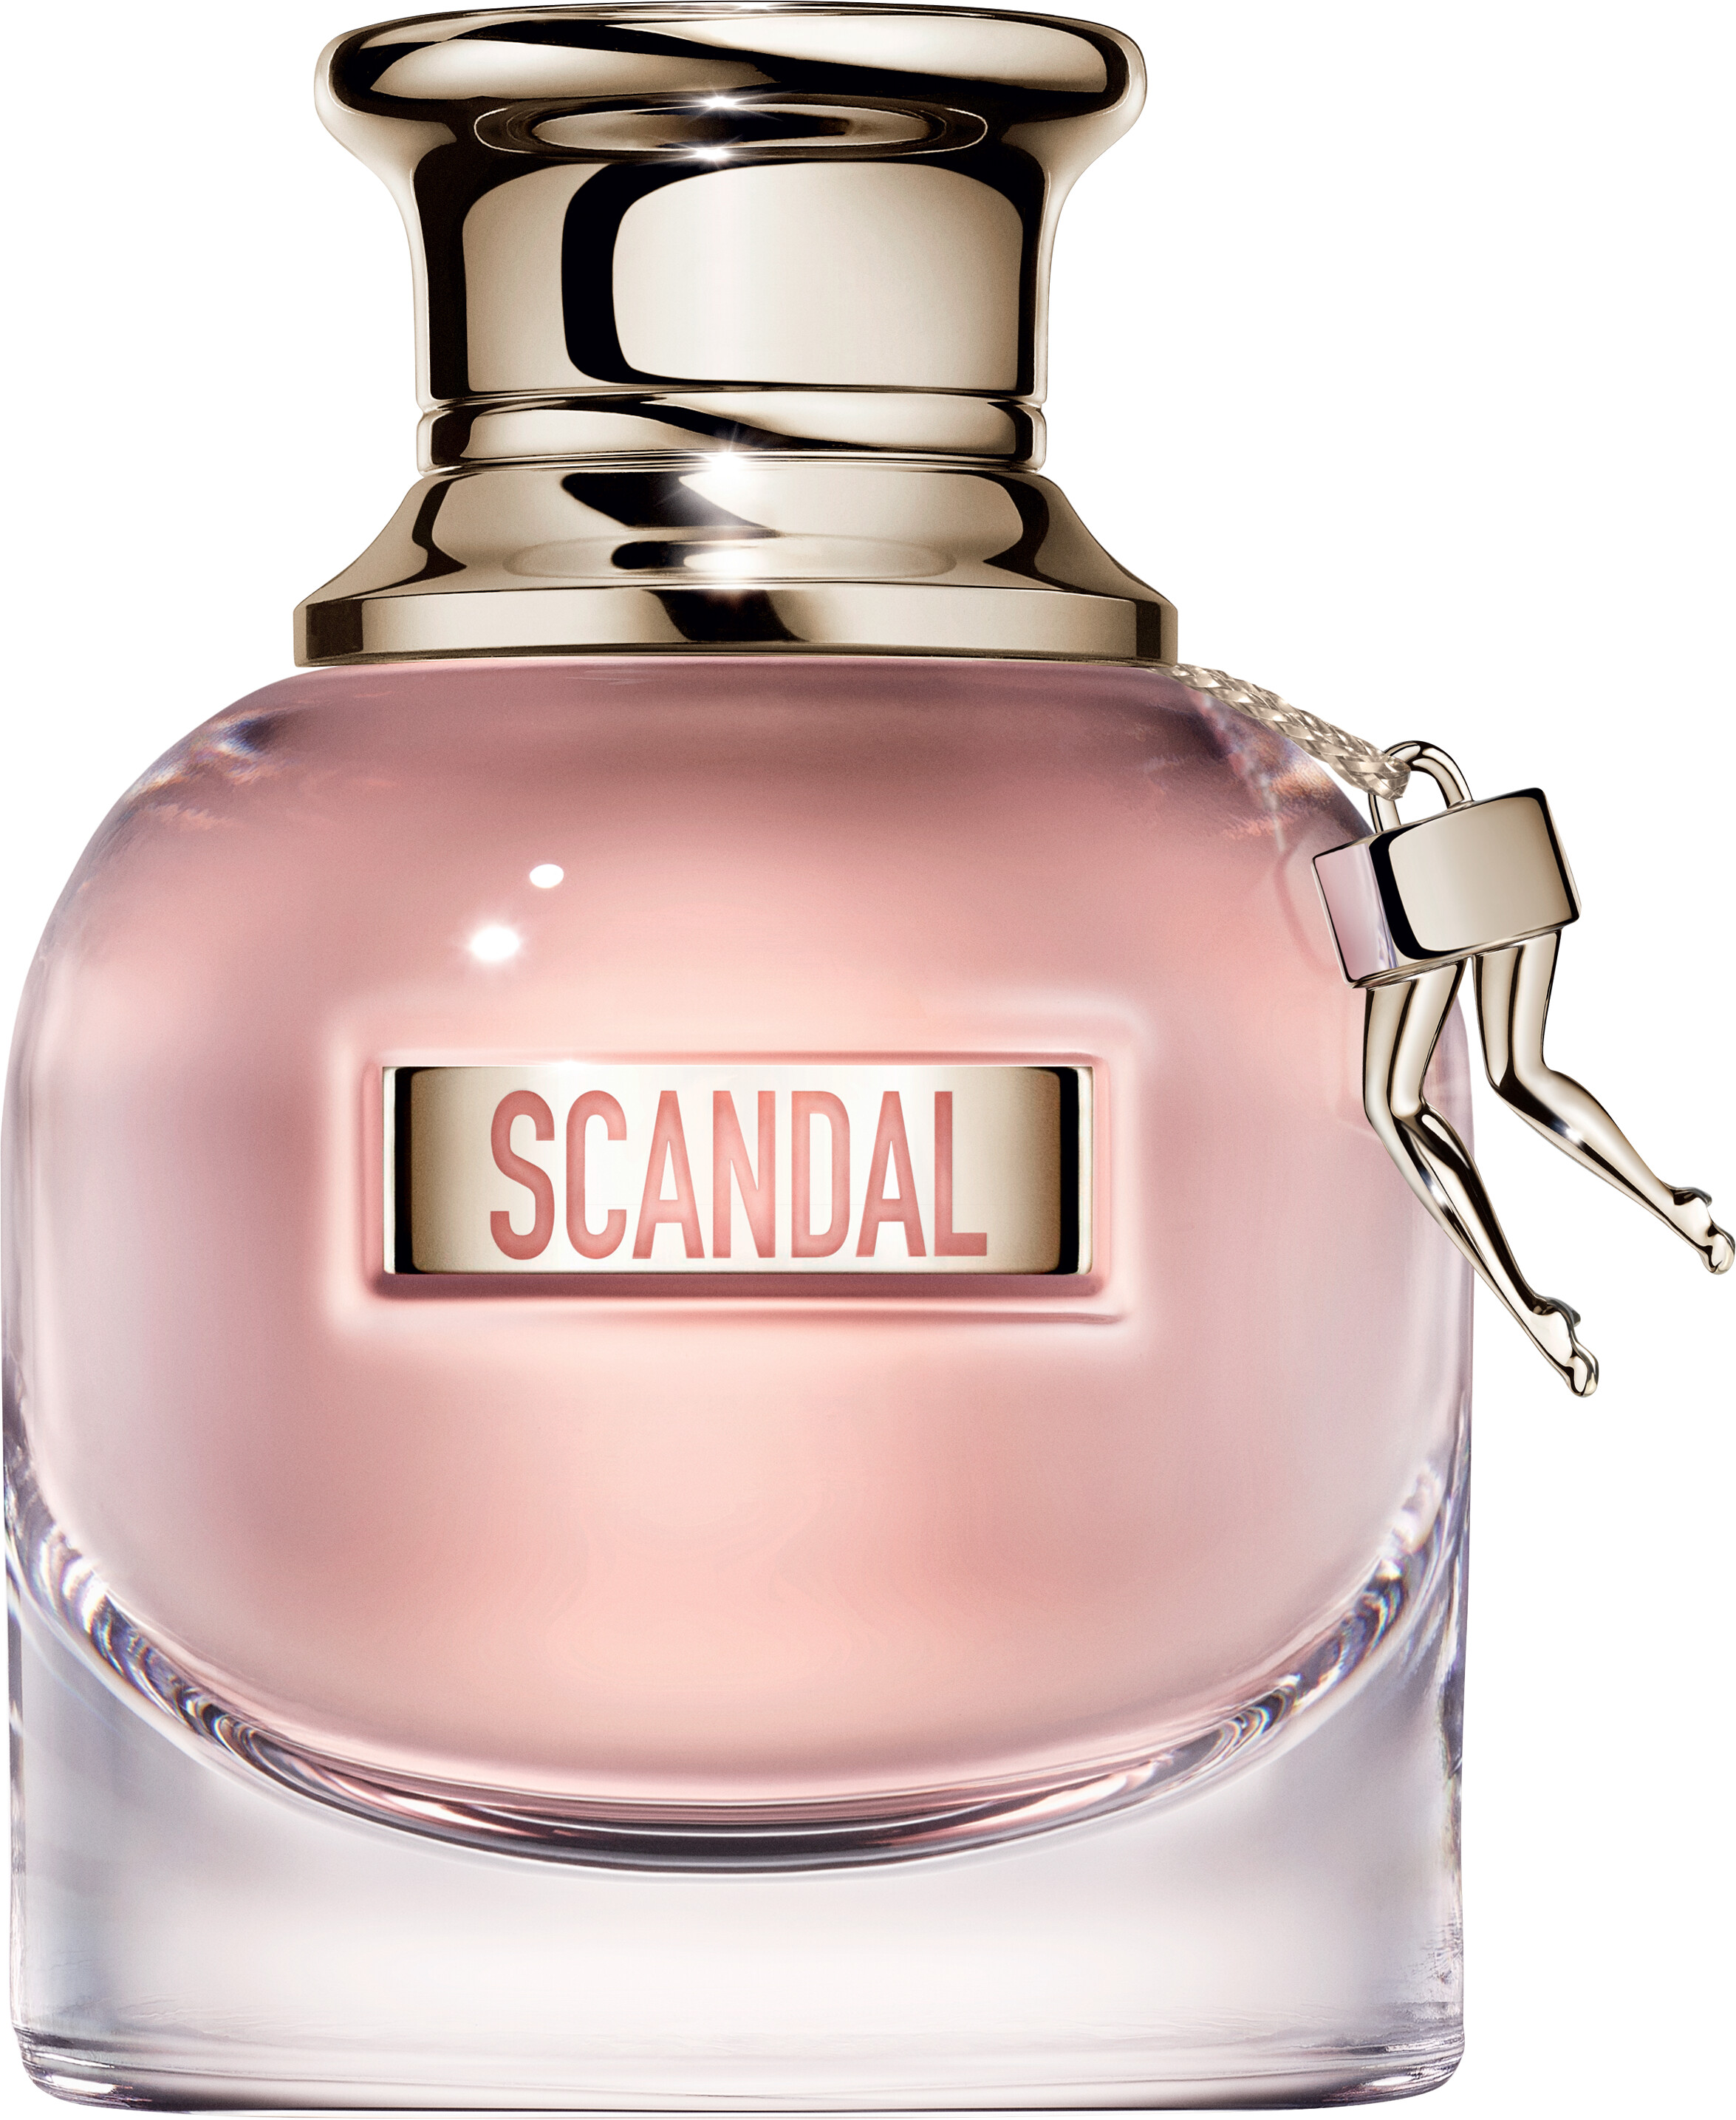 Jean Paul Gaultier Scandal Eau de Parfum Spray 30ml